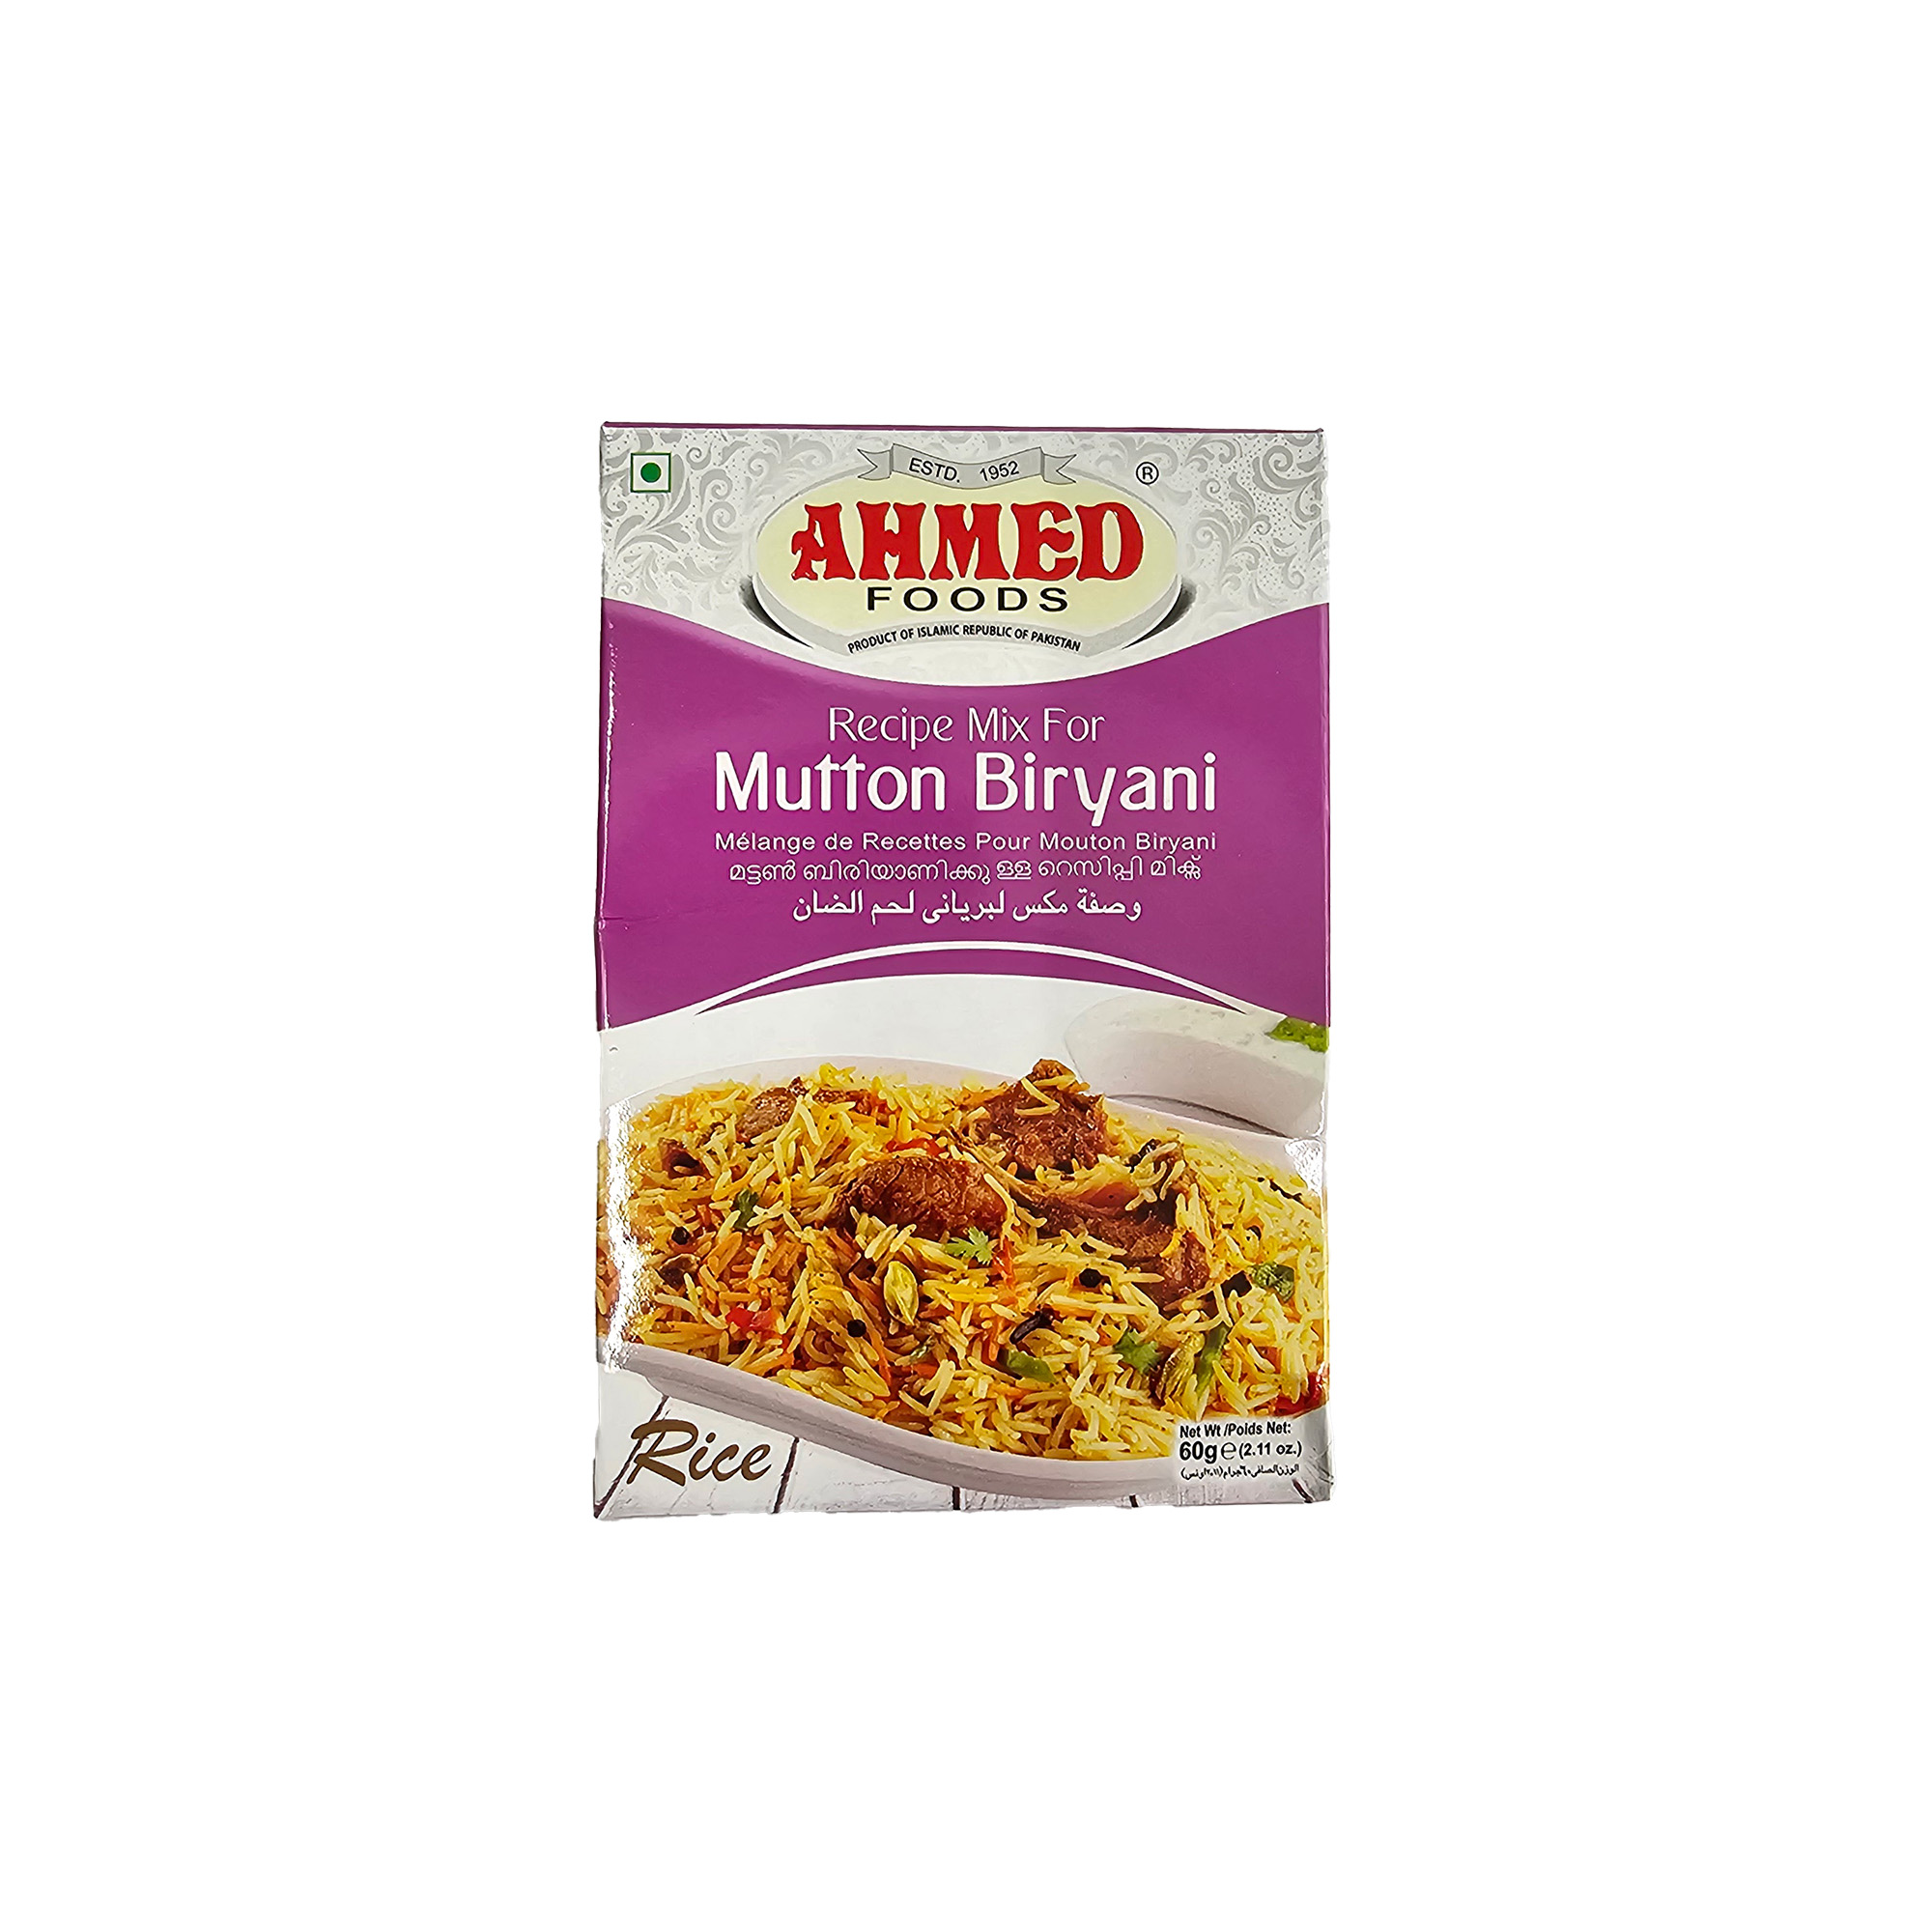 Mutton Biryani [AHMED FOODS]